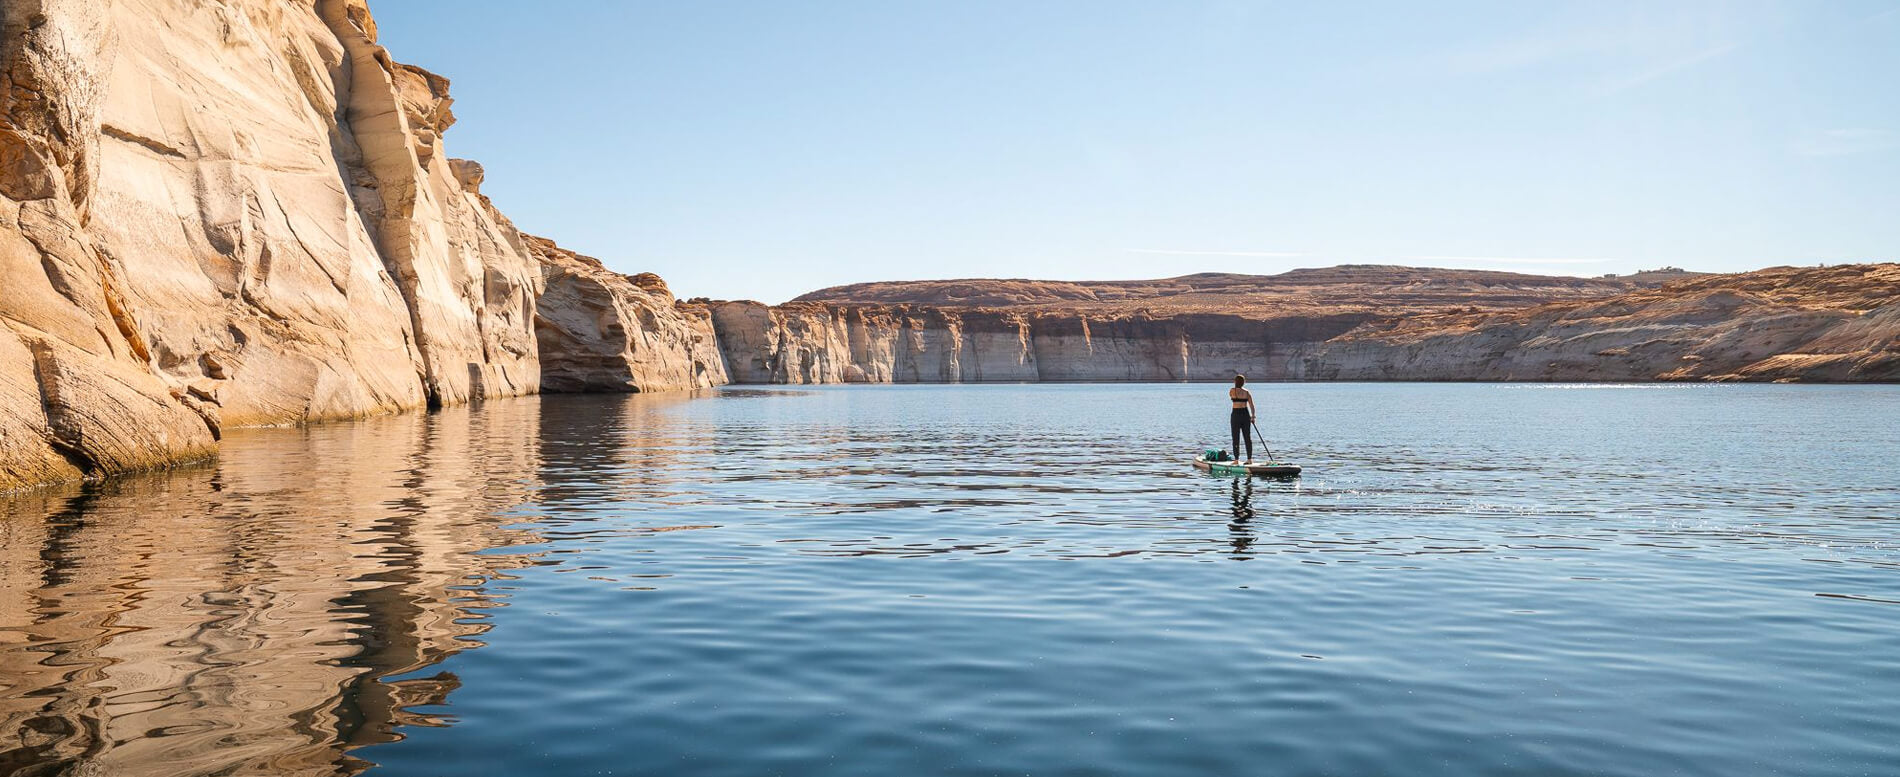 Woman paddle boarding on a flat water lake in antelope canyon